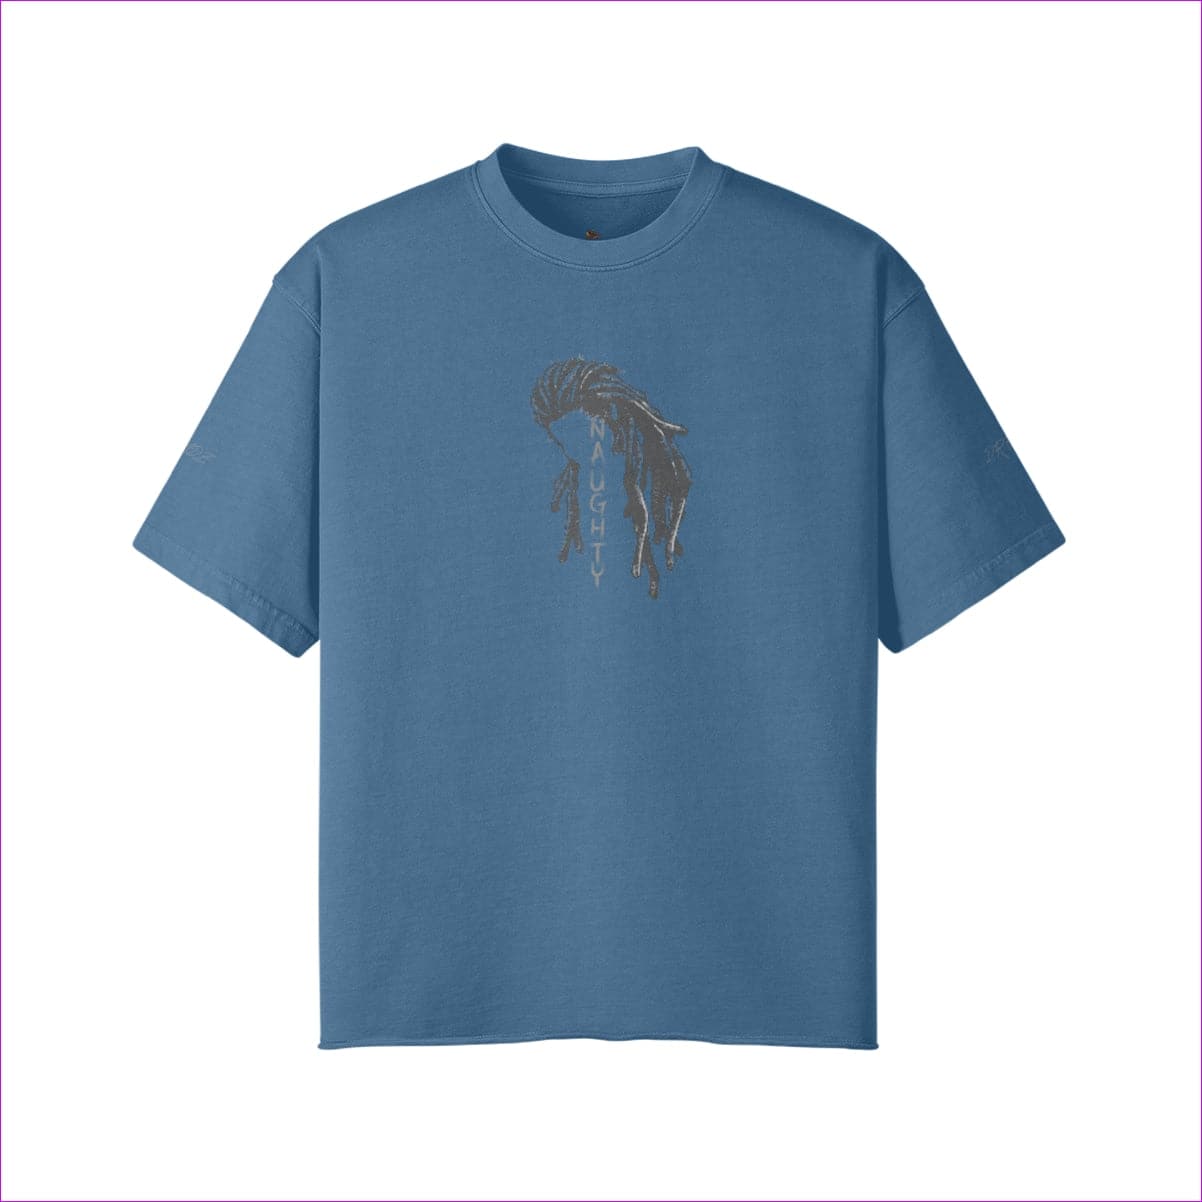 Medium Blue Naughty Dreadz Washed Raw Edge T-shirt - 8 colors - men's t-shirt at TFC&H Co.